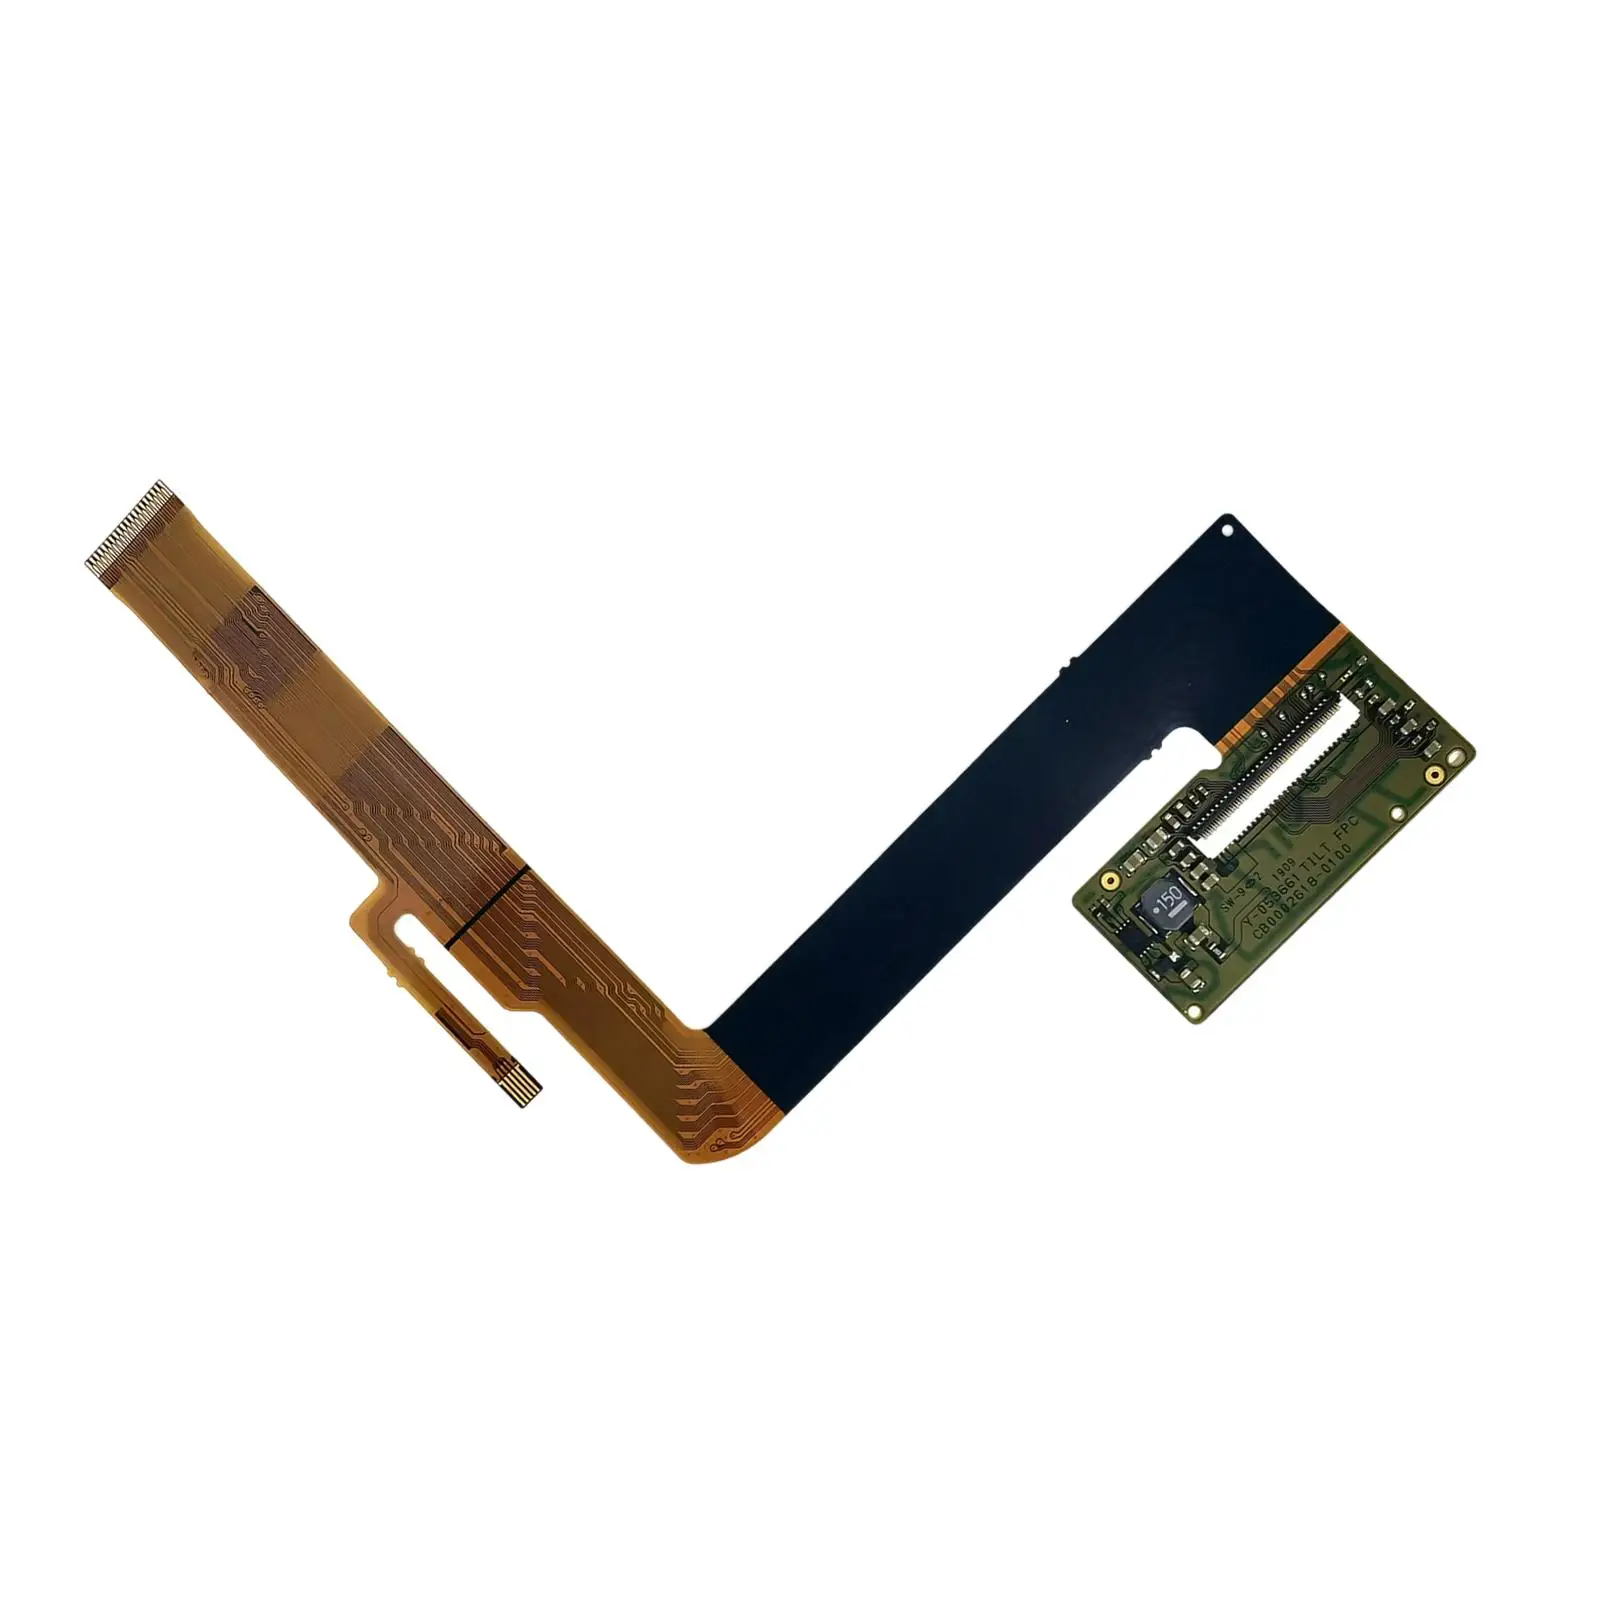 LCD Display Flex Cable Replace Parts for XT20 X-T20 Digital Camera Repair Parts